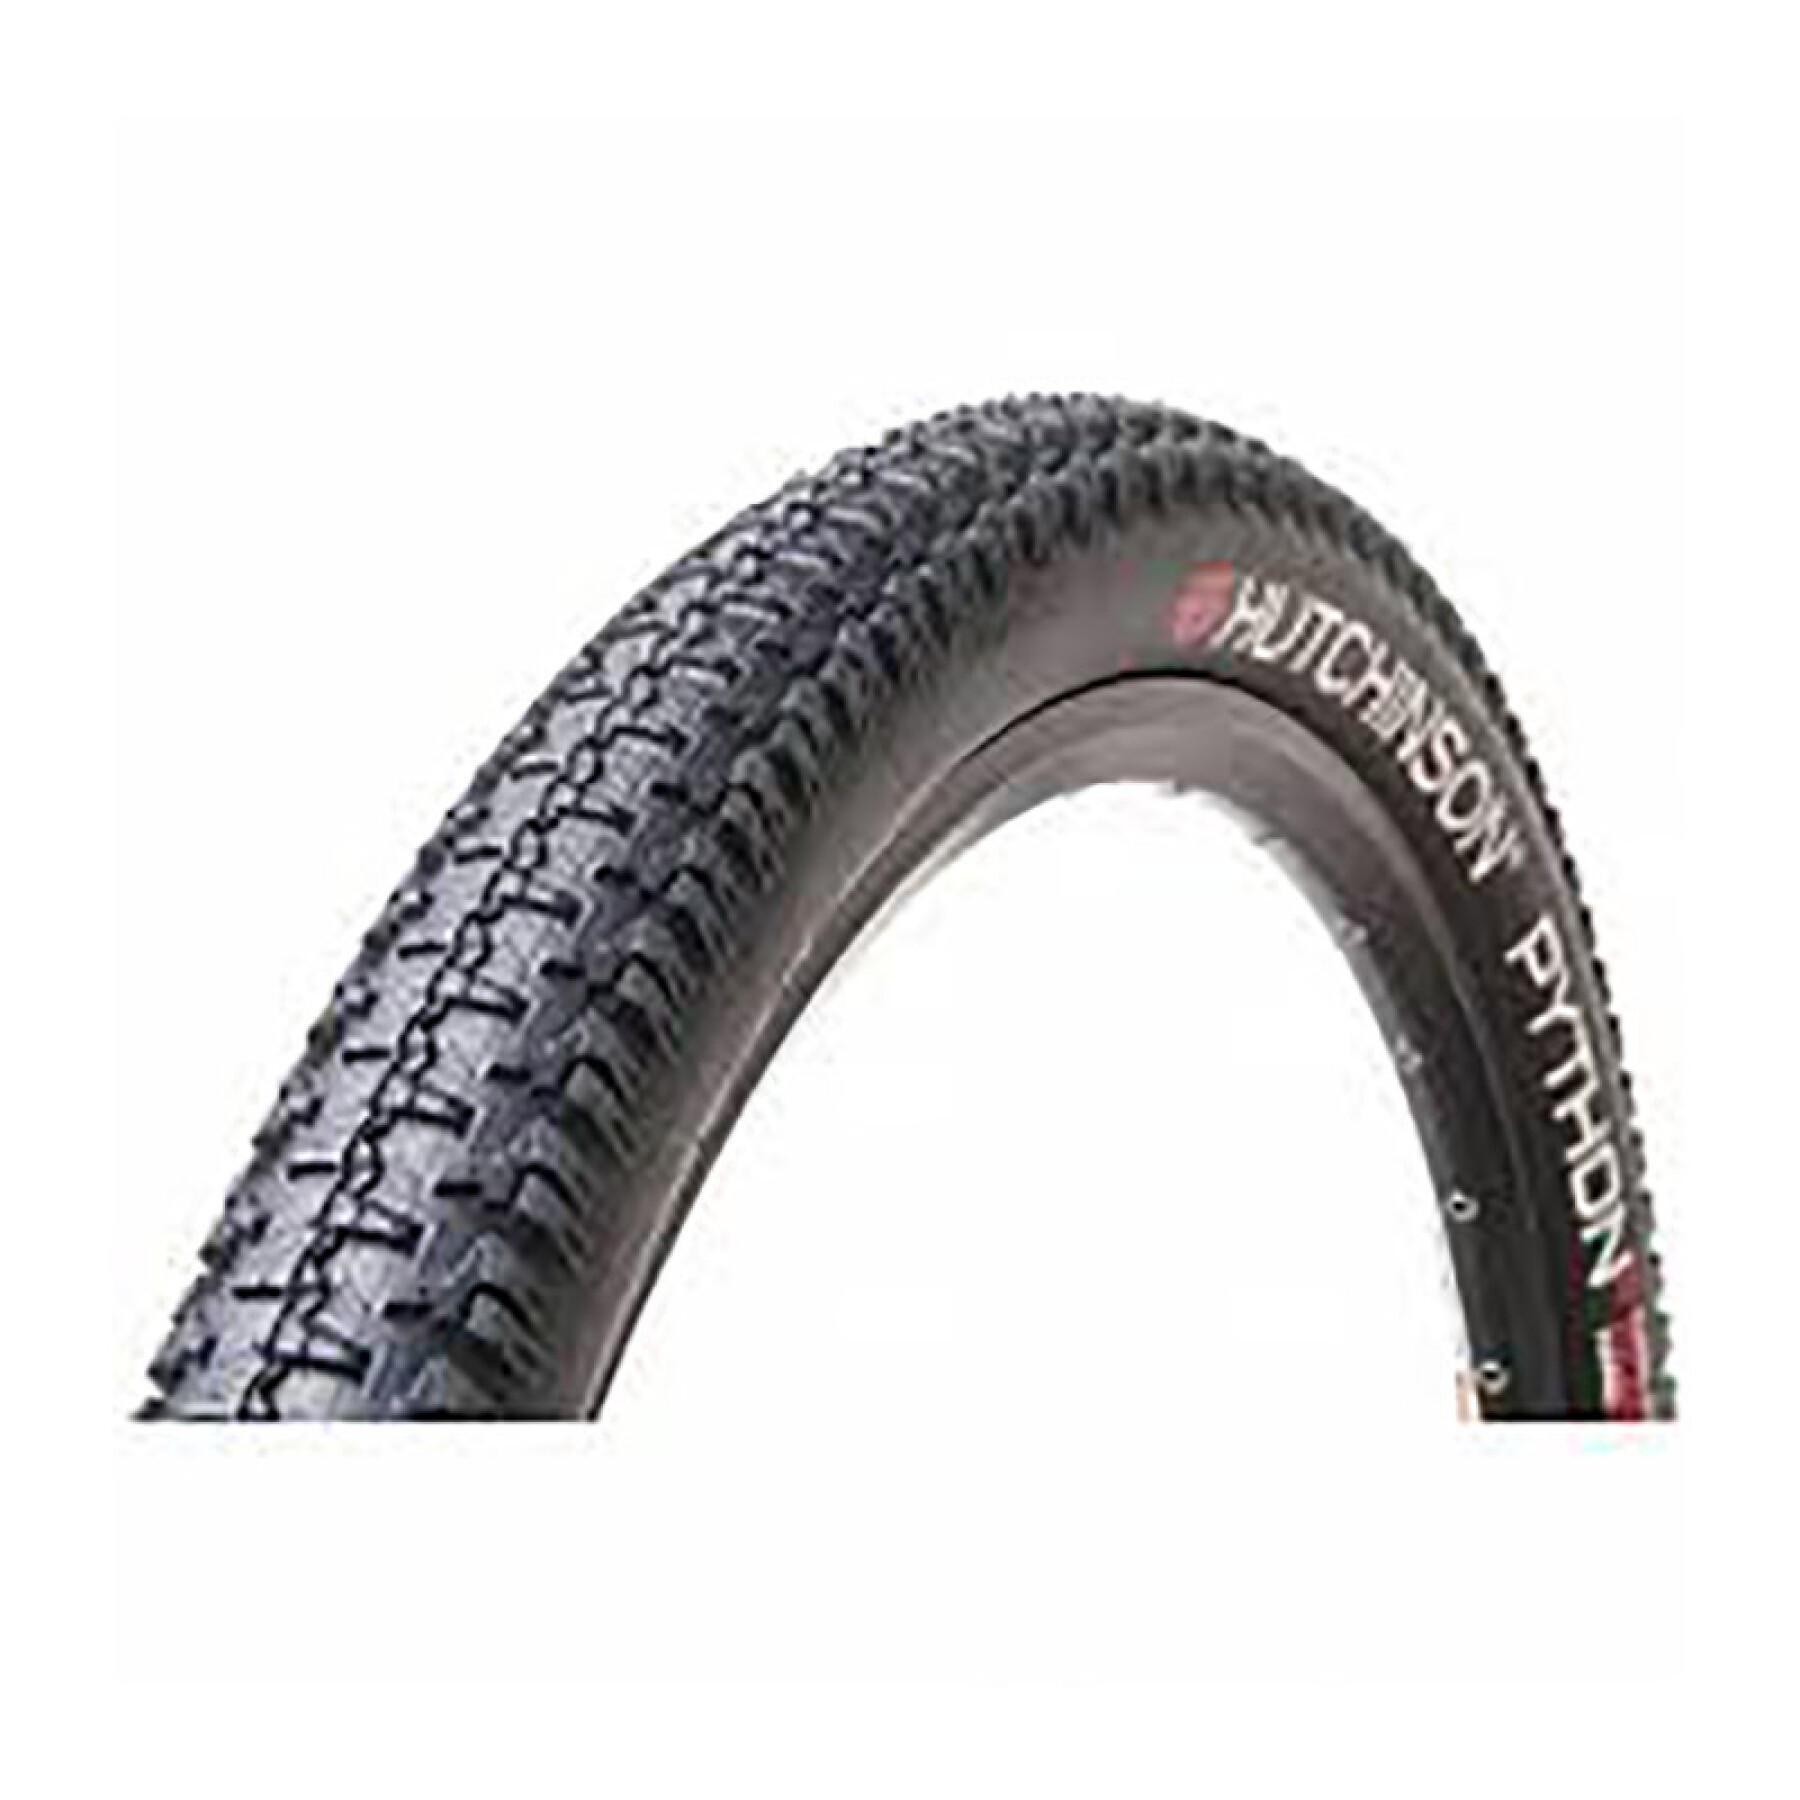 Tubeless mountain bike tire Hutchinson Python 2 54-622